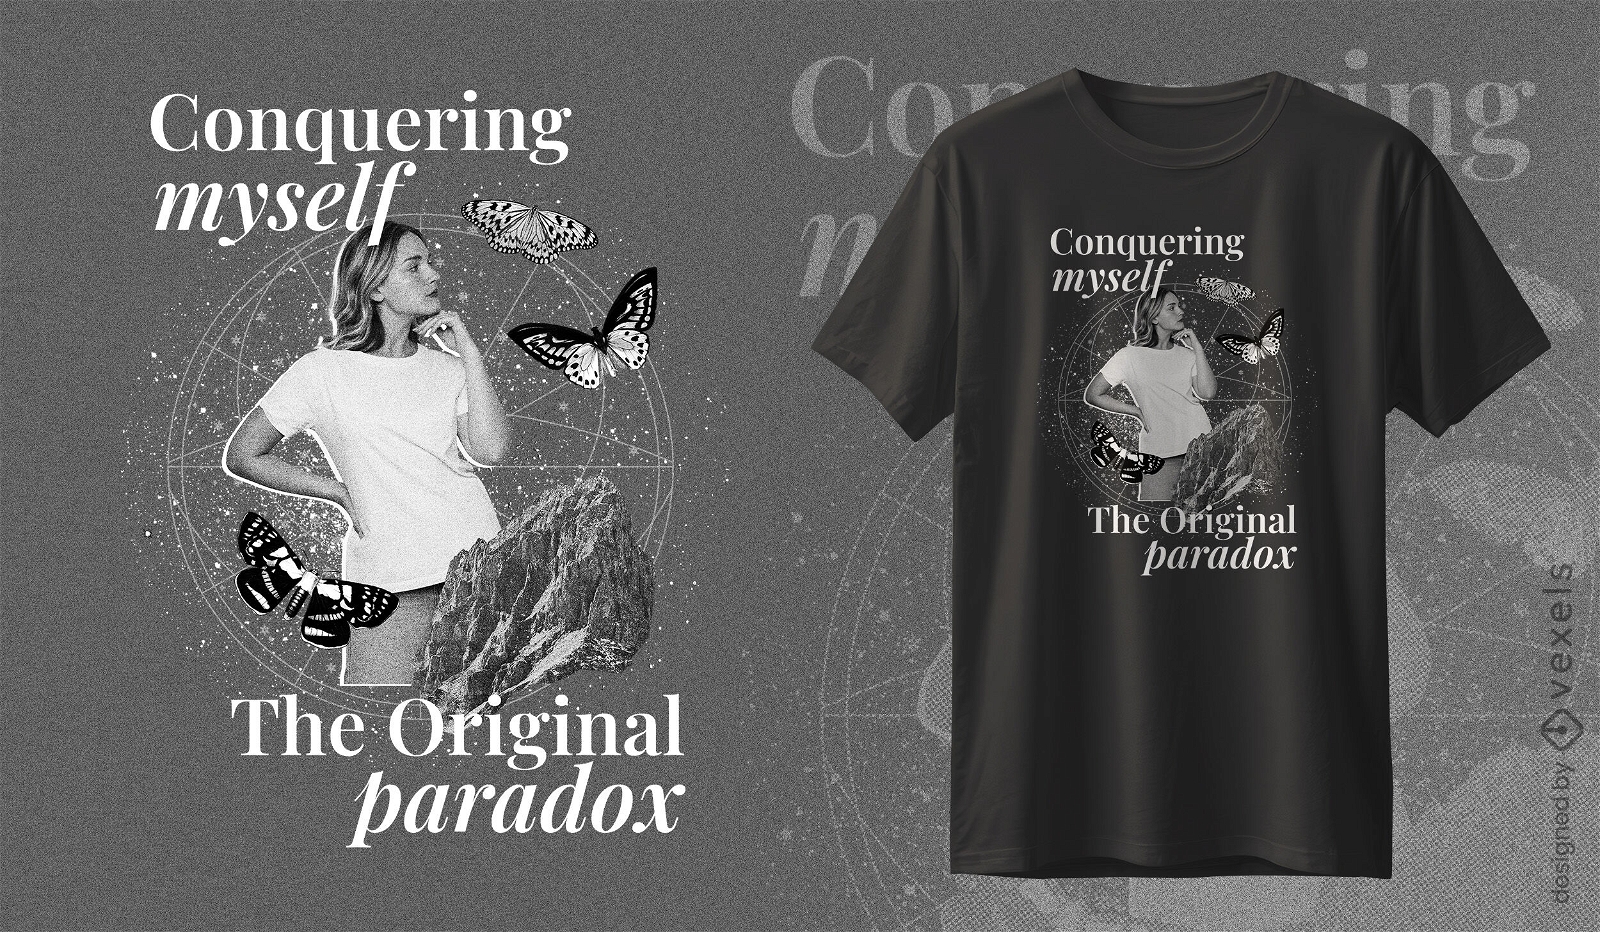 Conquering self t-shirt design